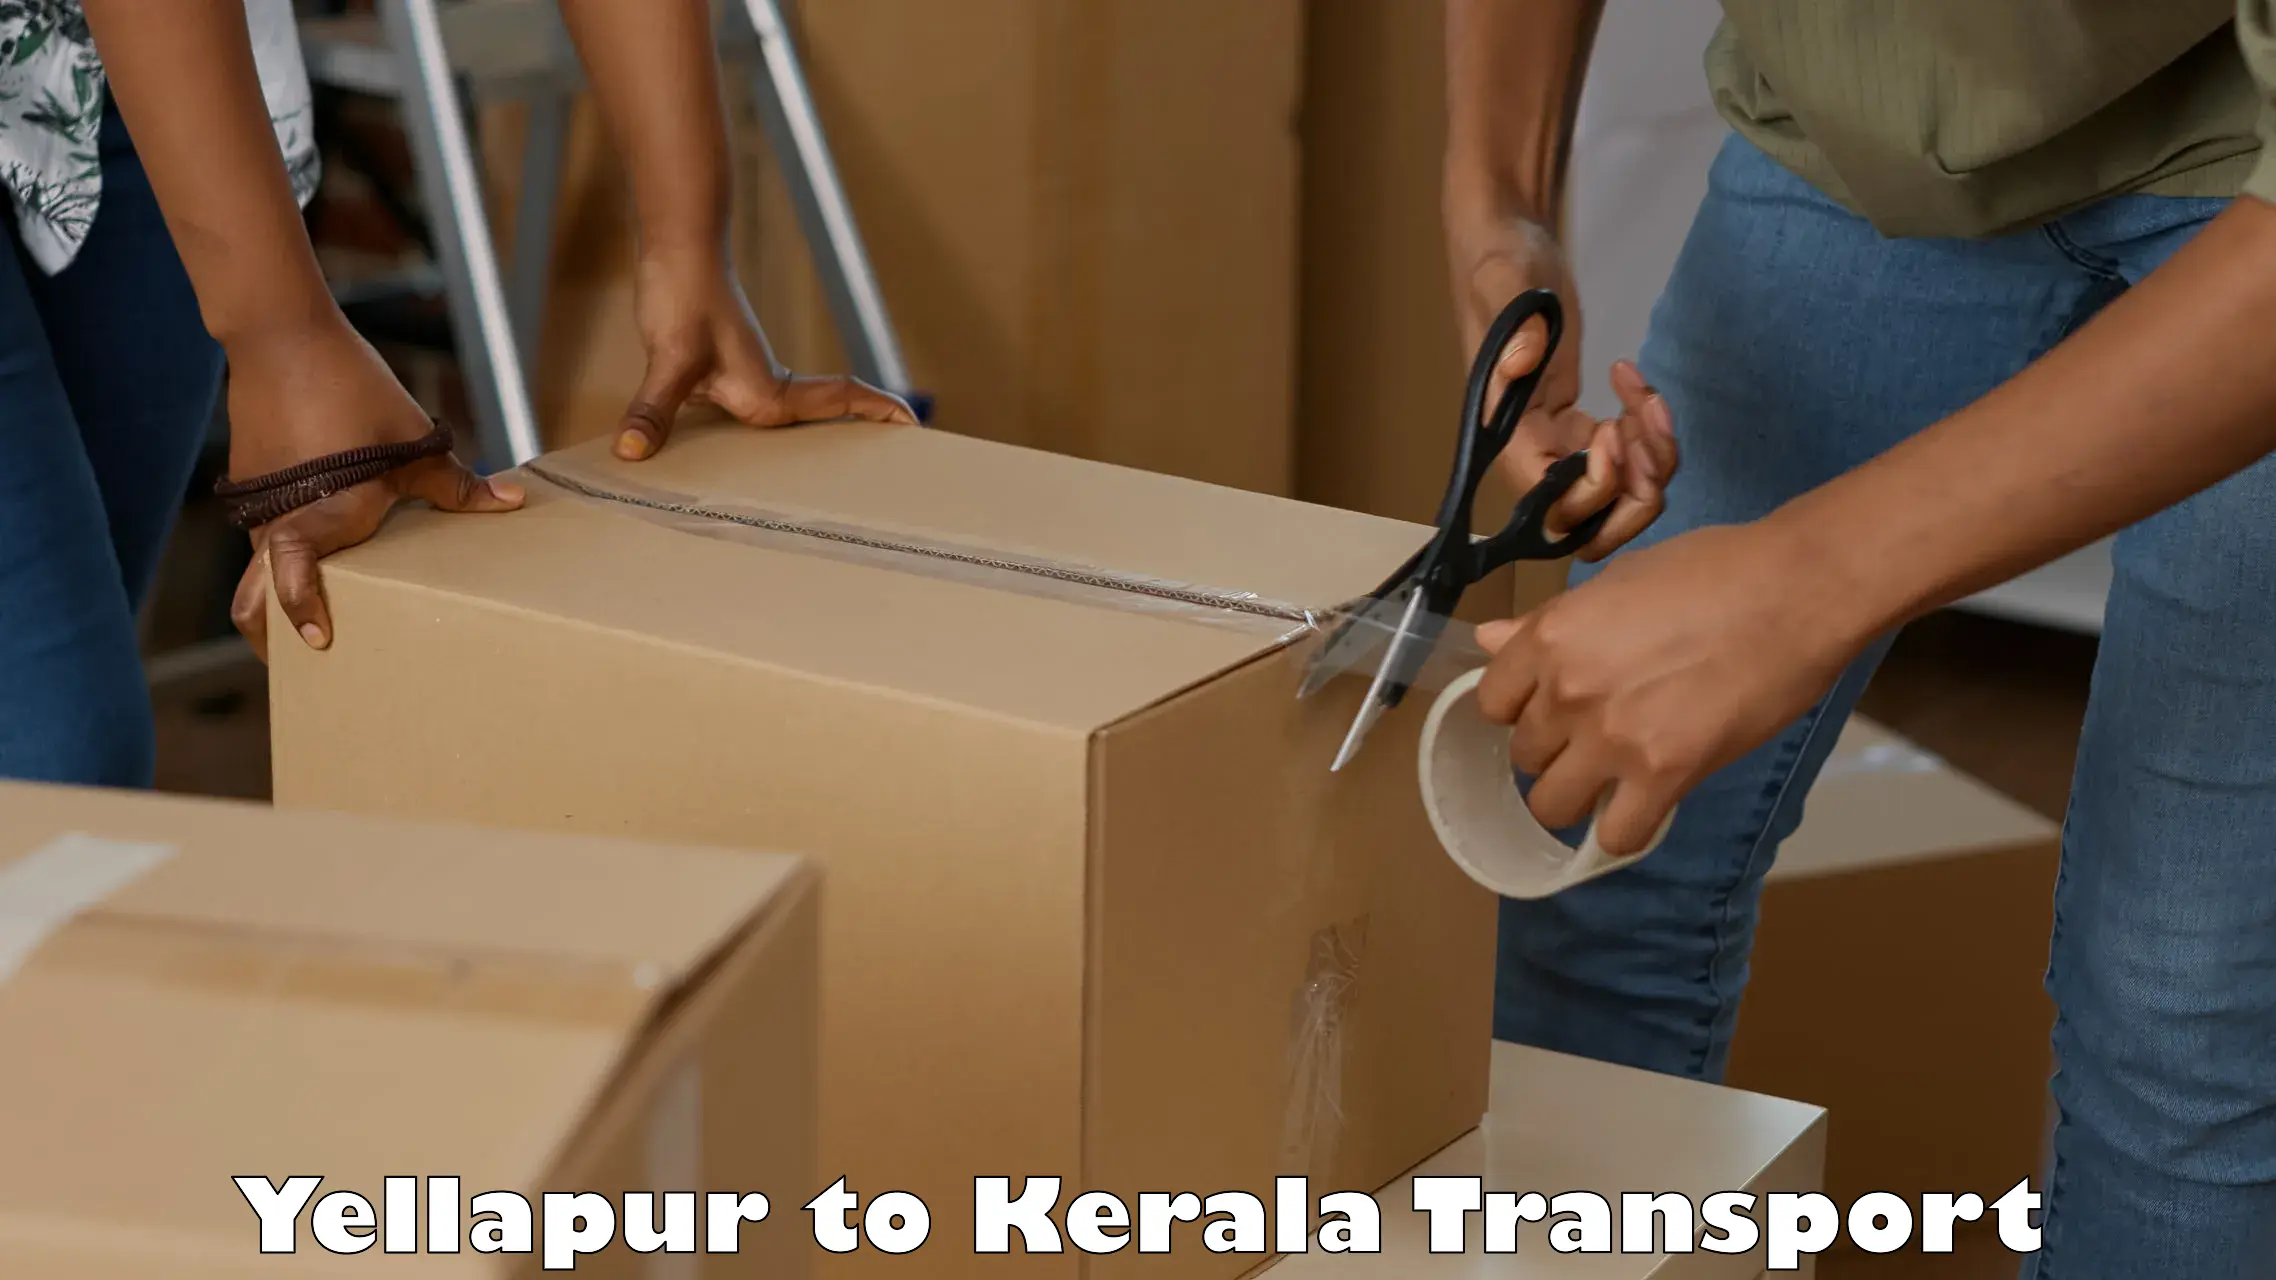 Truck transport companies in India Yellapur to Kerala